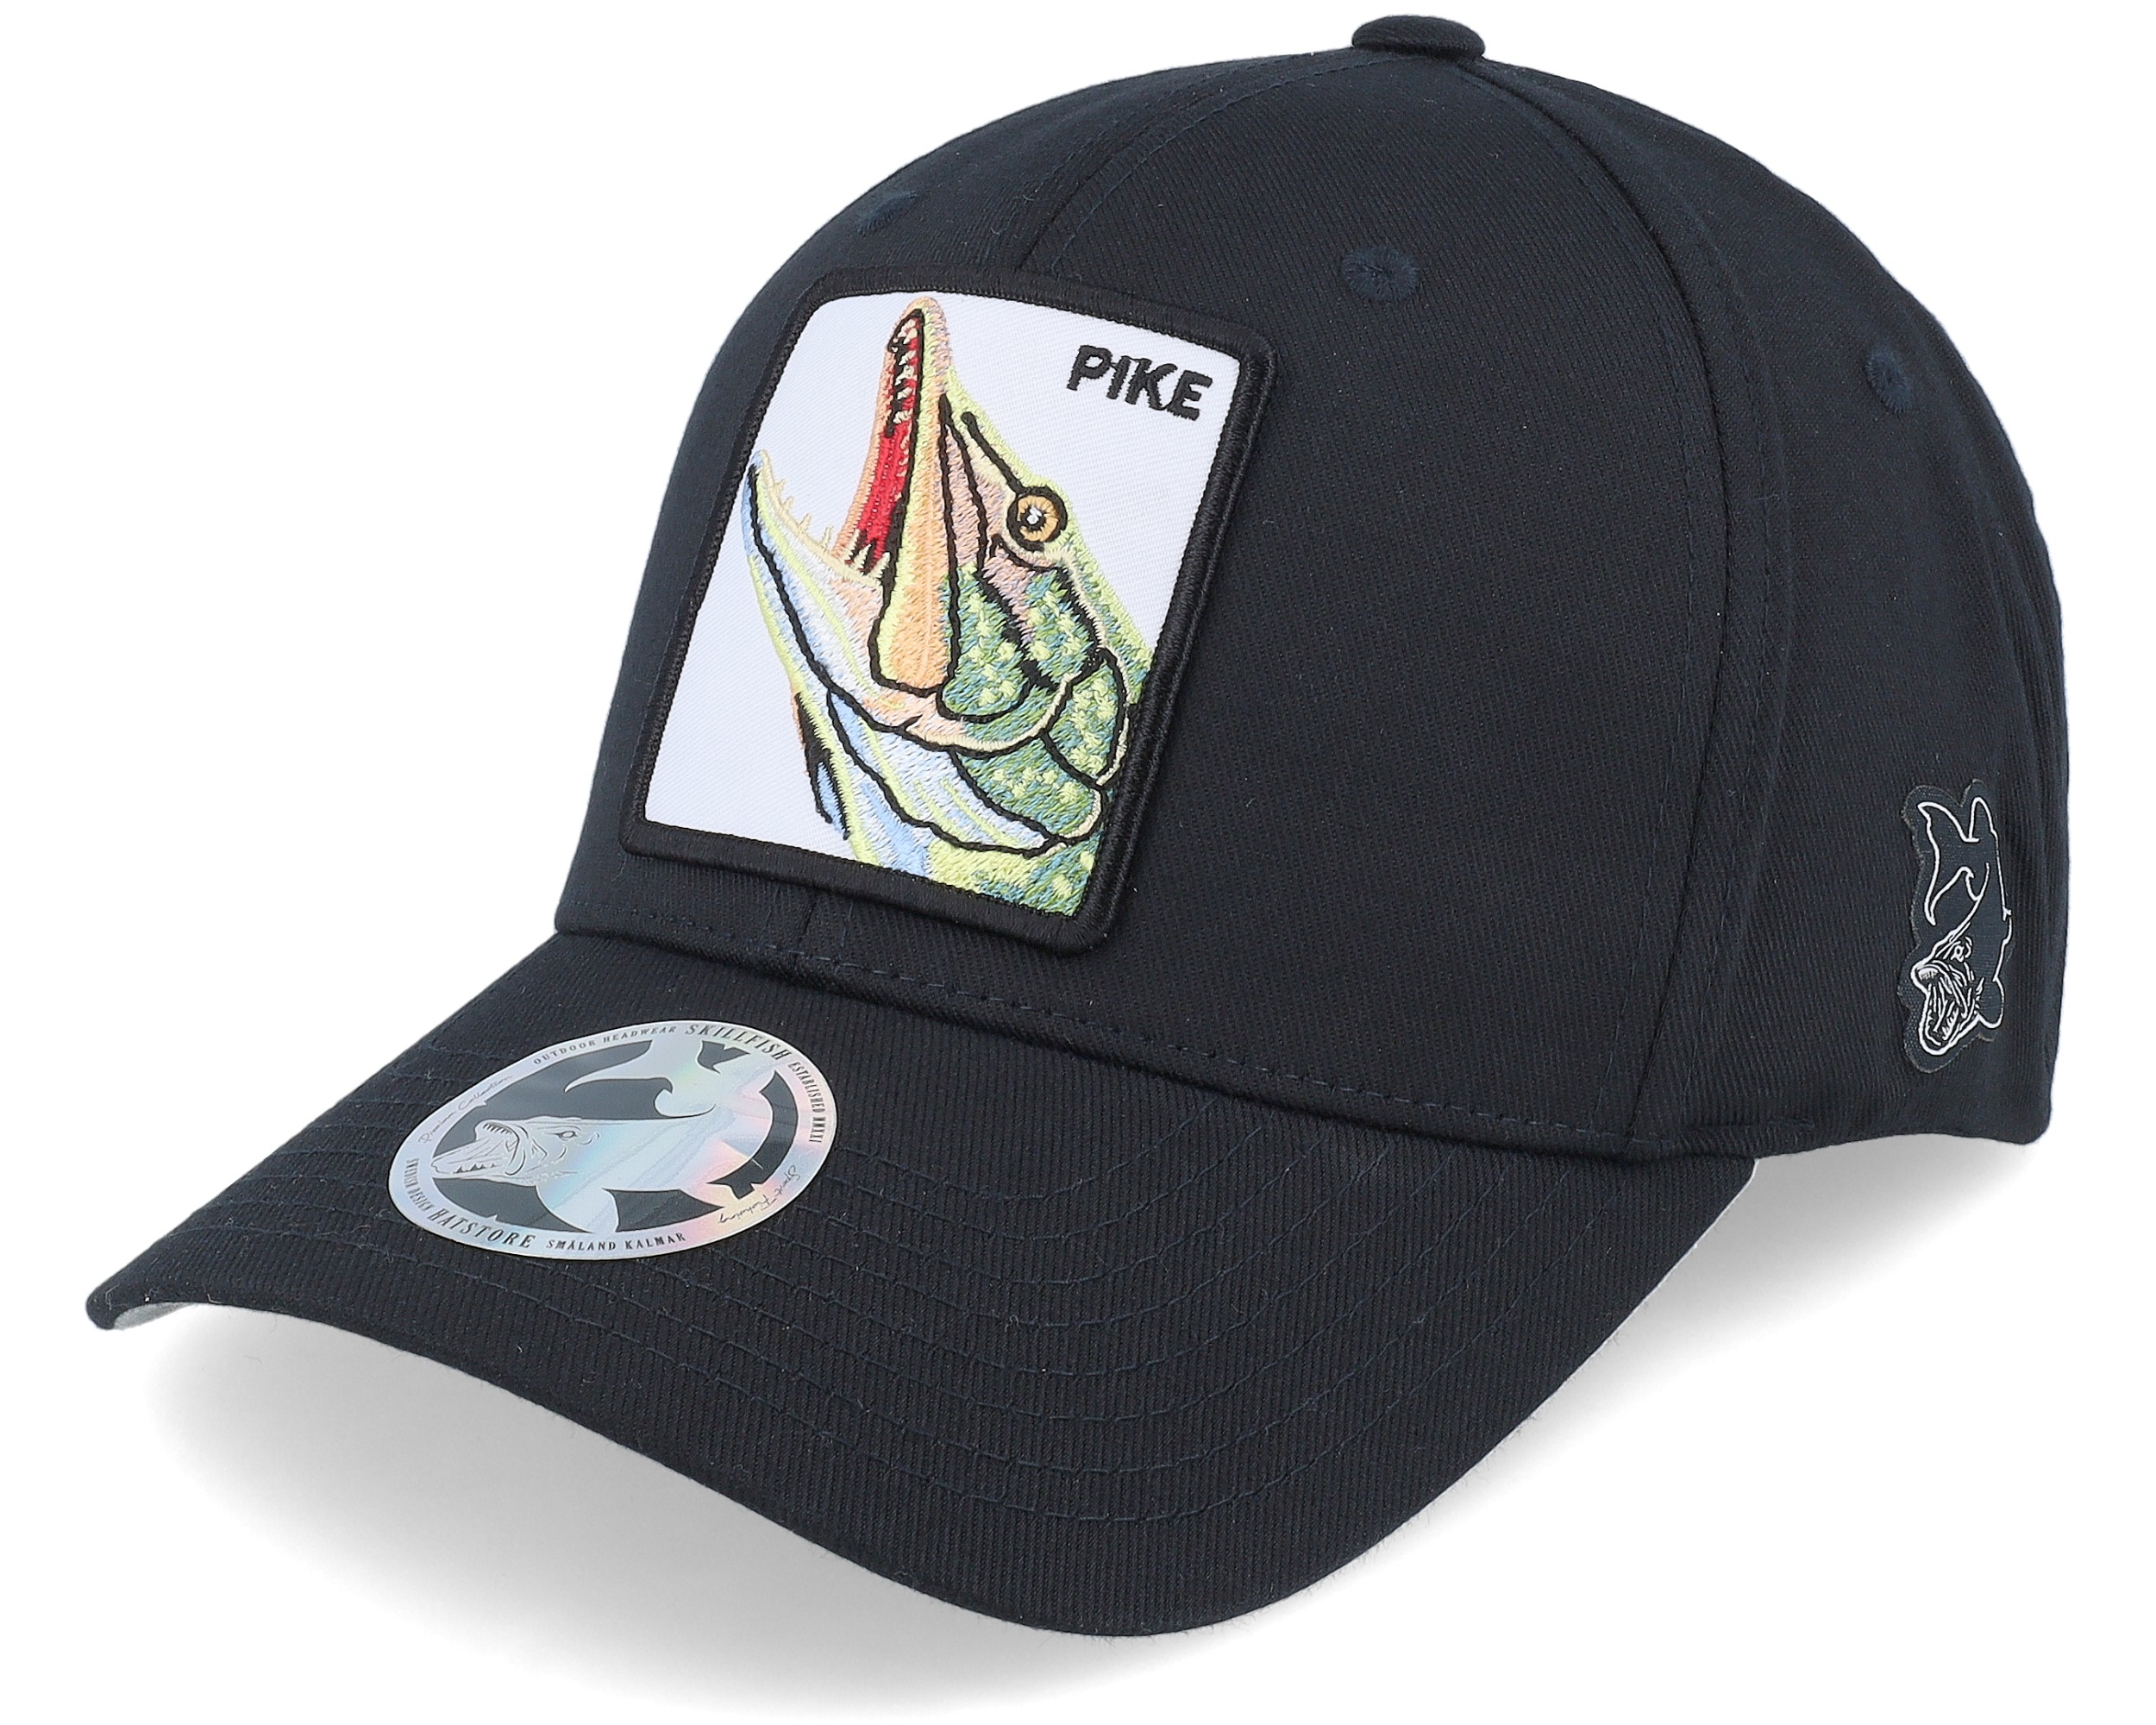 Pike Black Flexfit - Skillfish cap